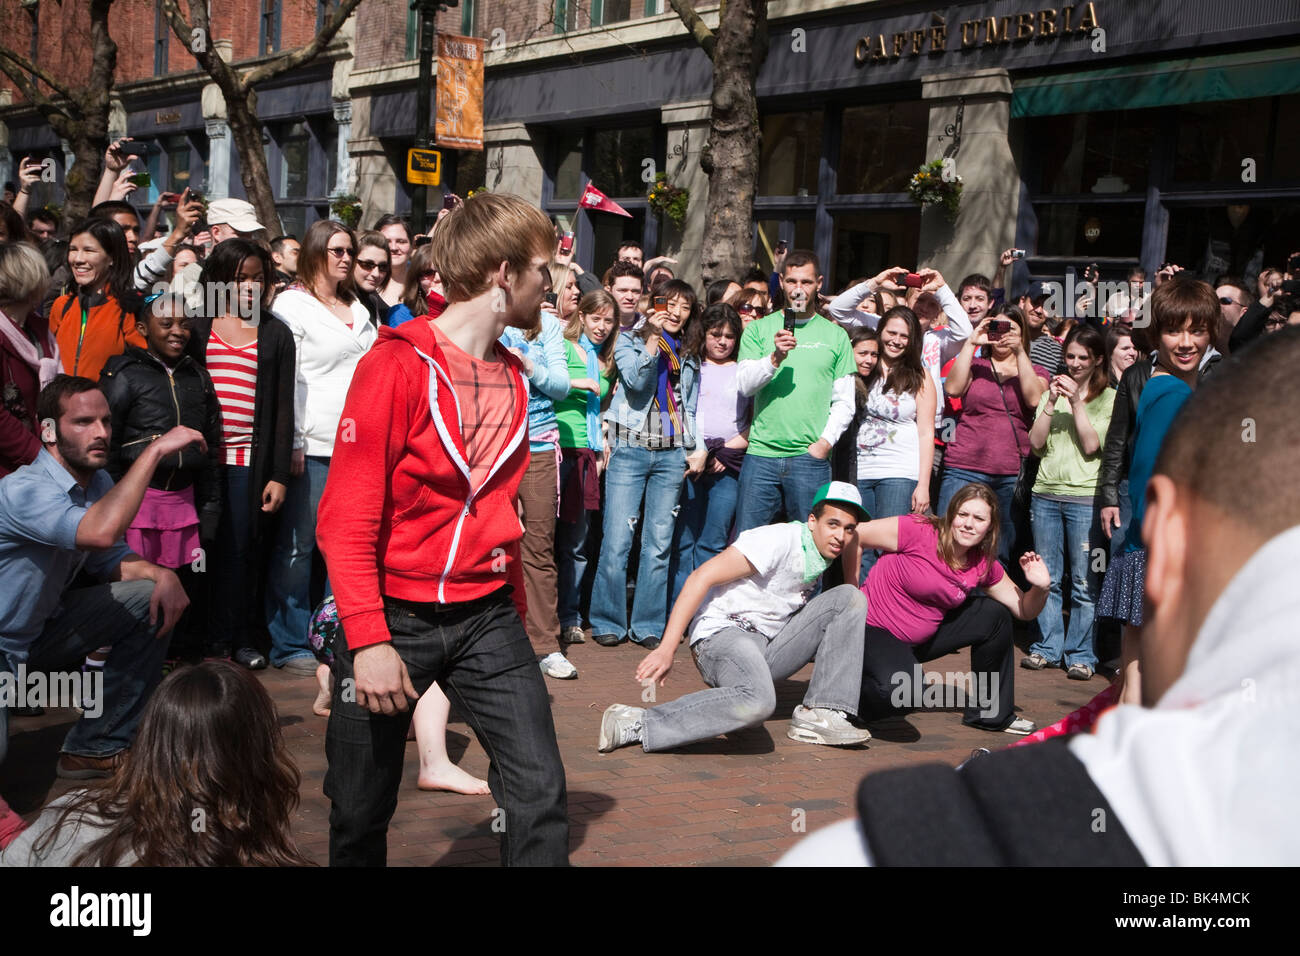 Glee Flash Mob April 10, 2010 - Seattle Washington Stock Photo - Alamy